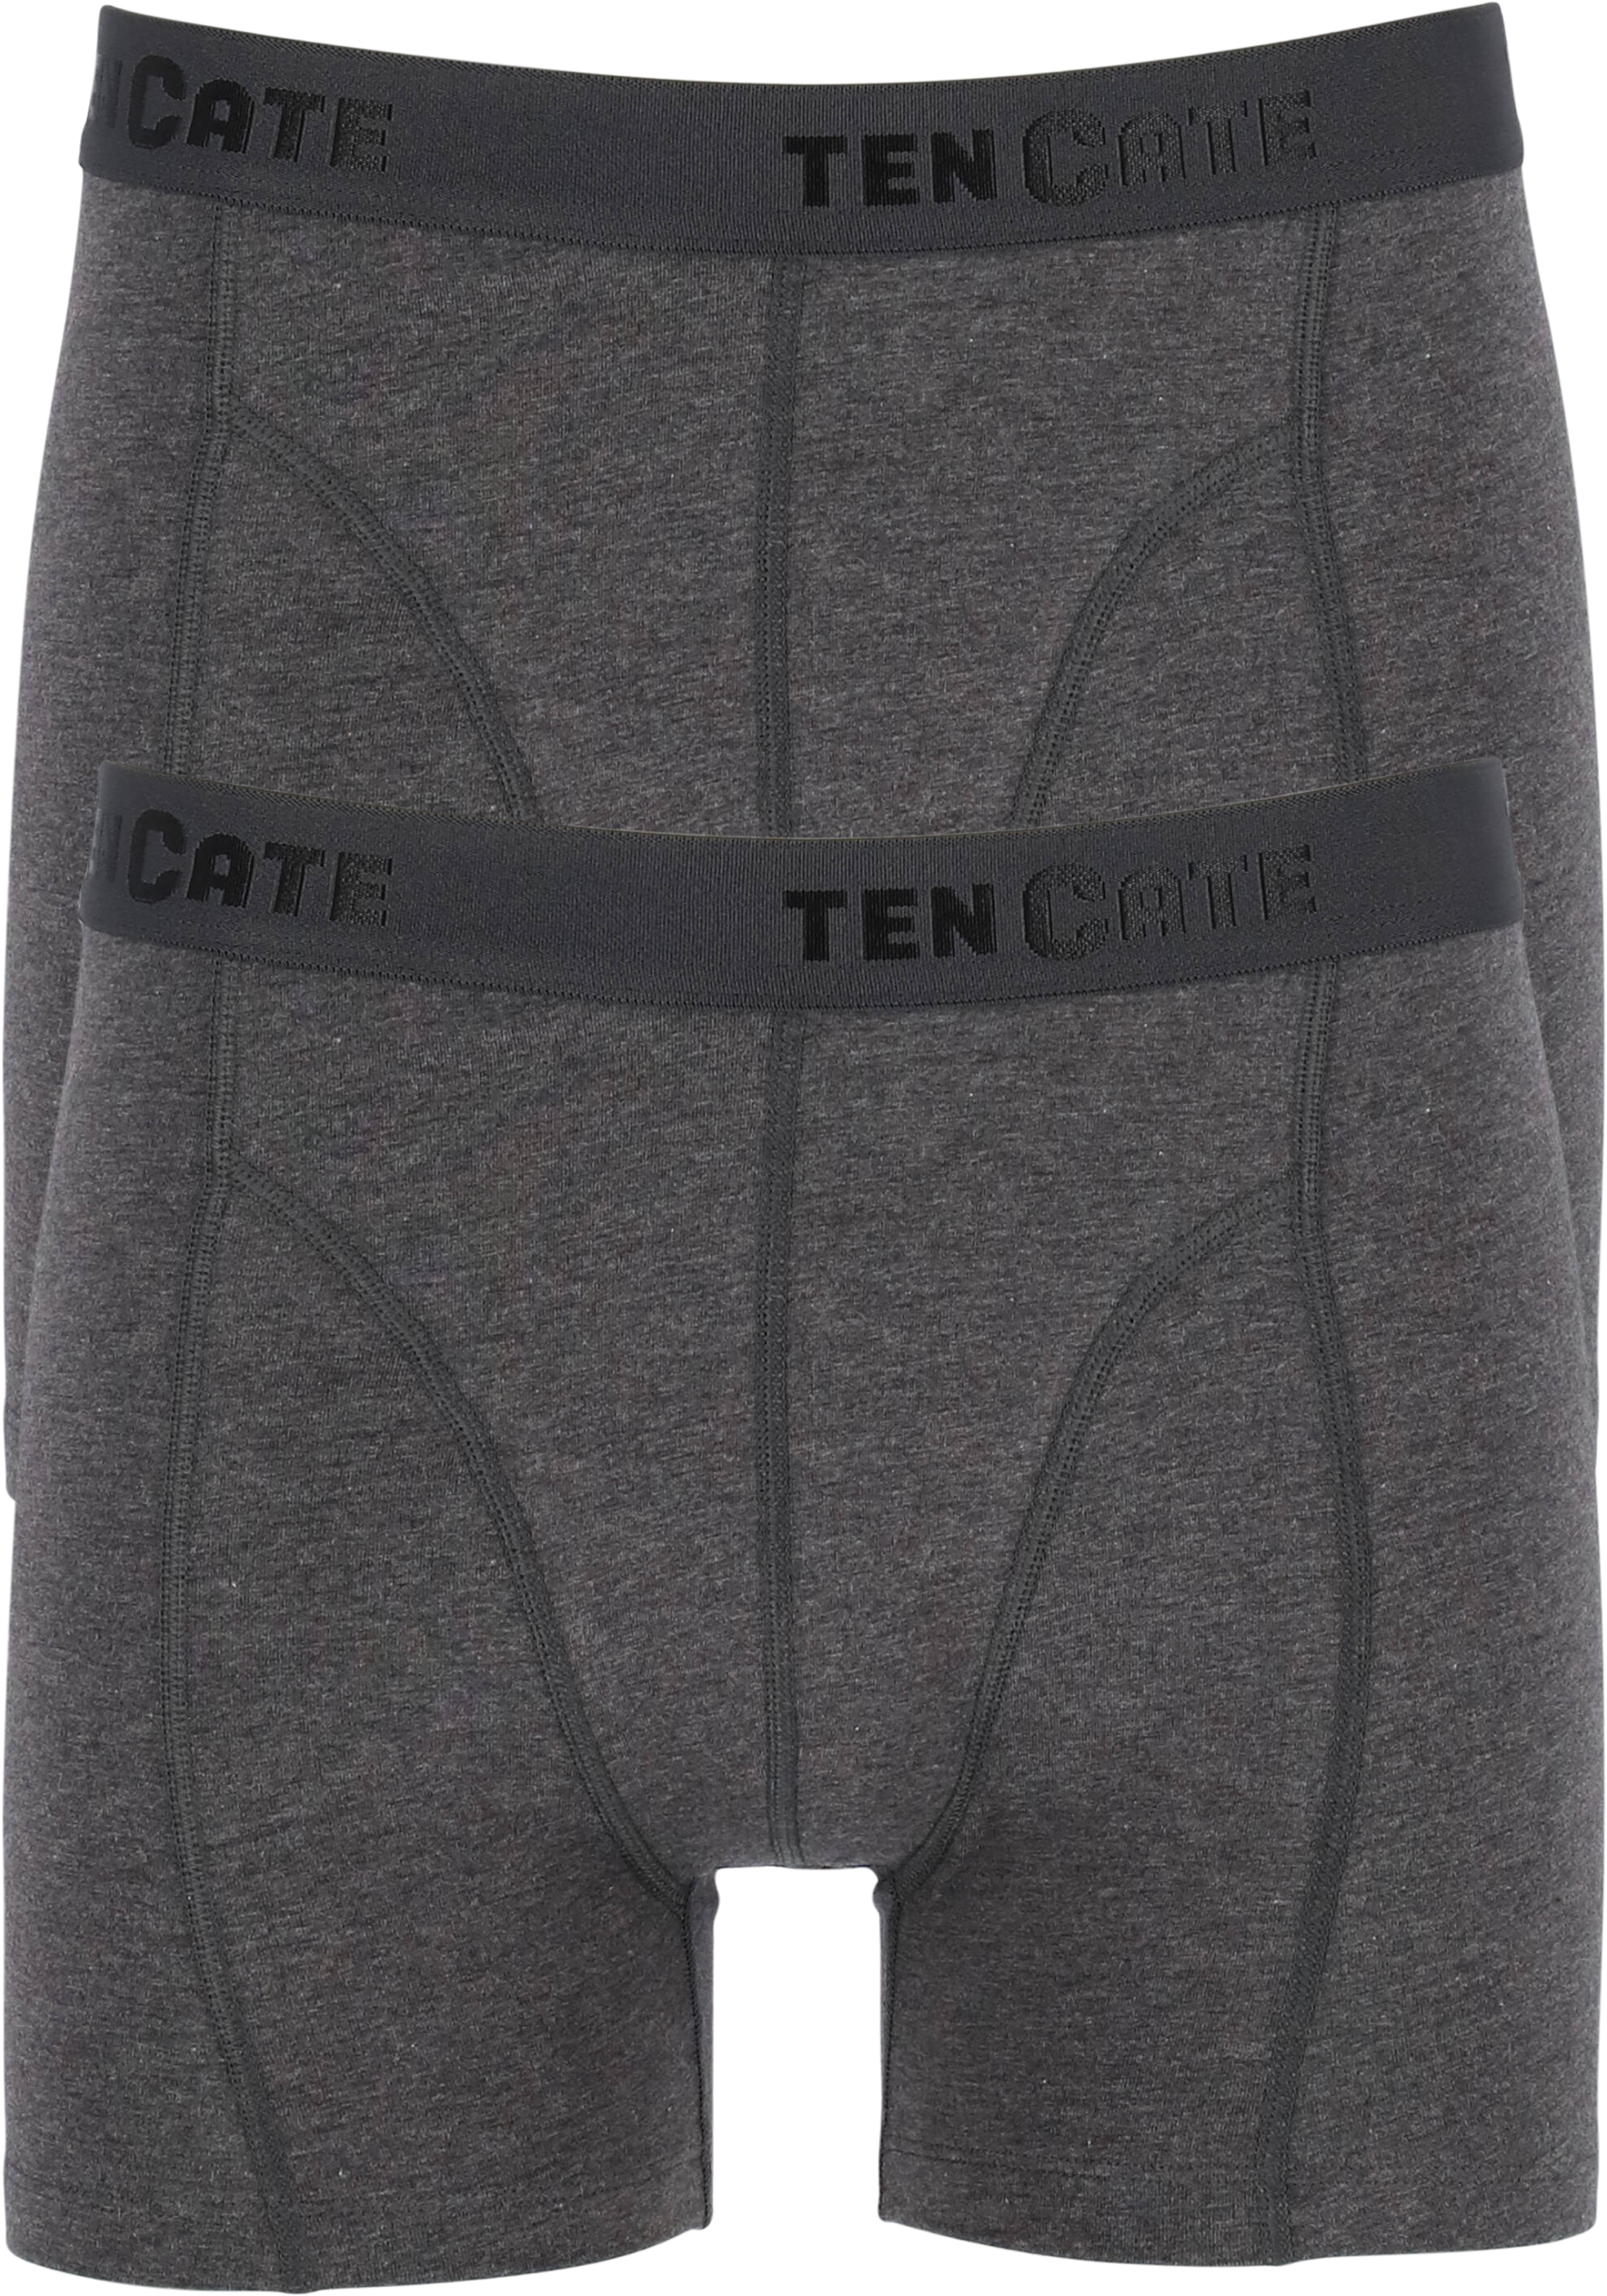 TEN CATE Basics men shorts (2-pack), heren boxers normale lengte, antraciet grijs melange